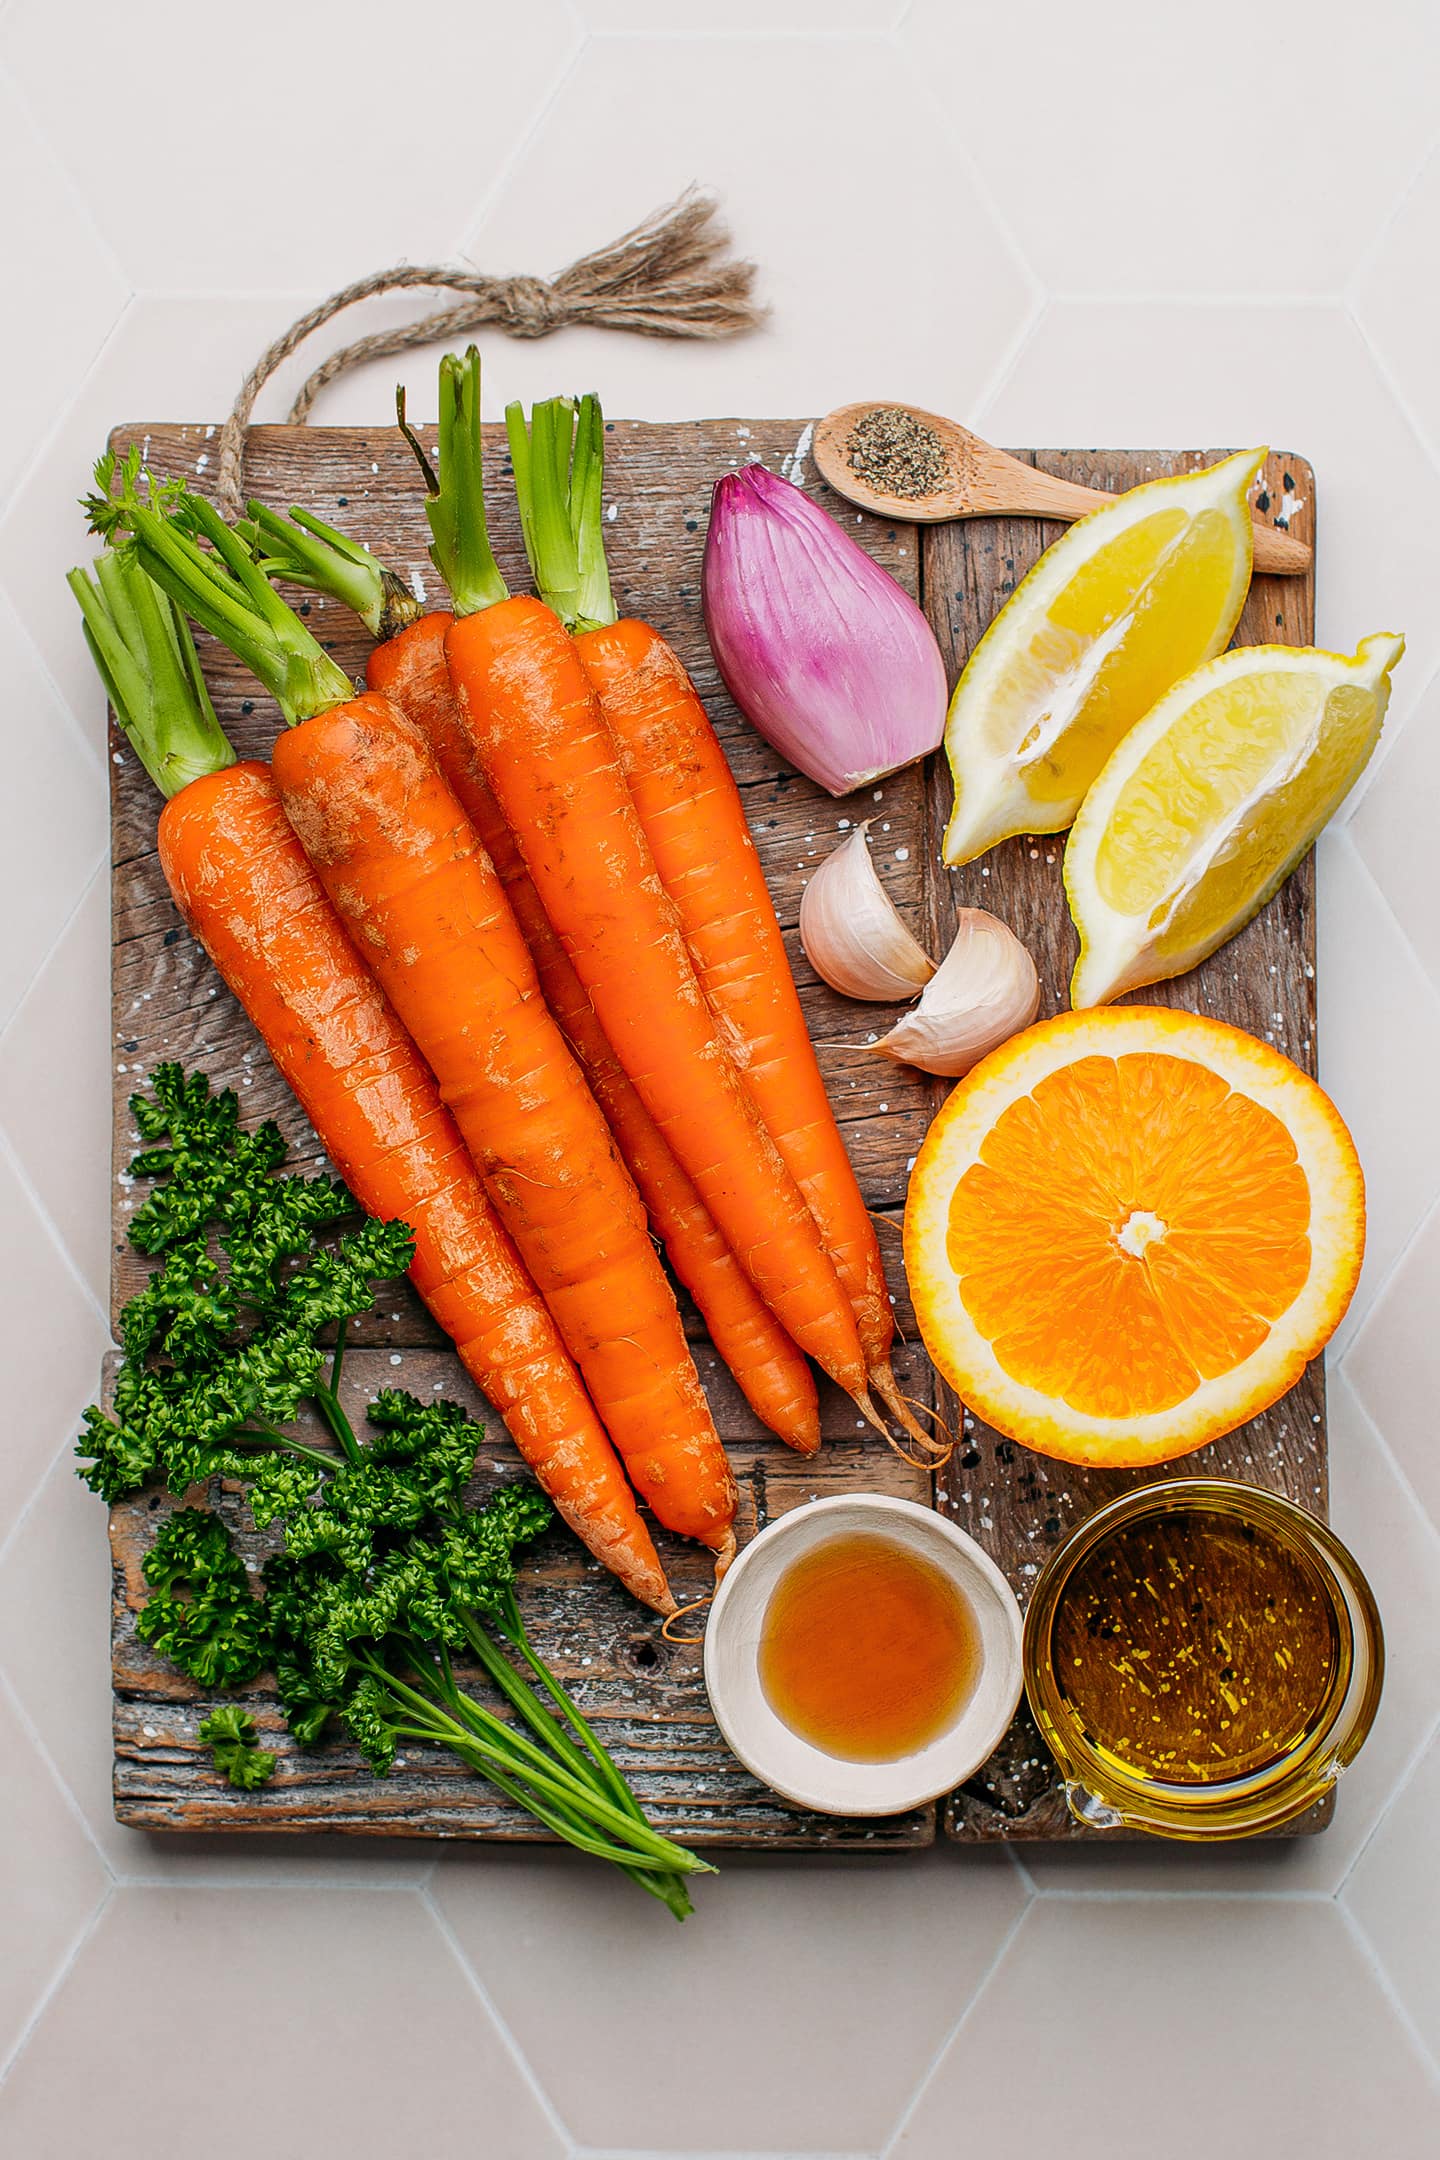 Ingredients like carrots, lemon, shallots, garlic, and parsley.